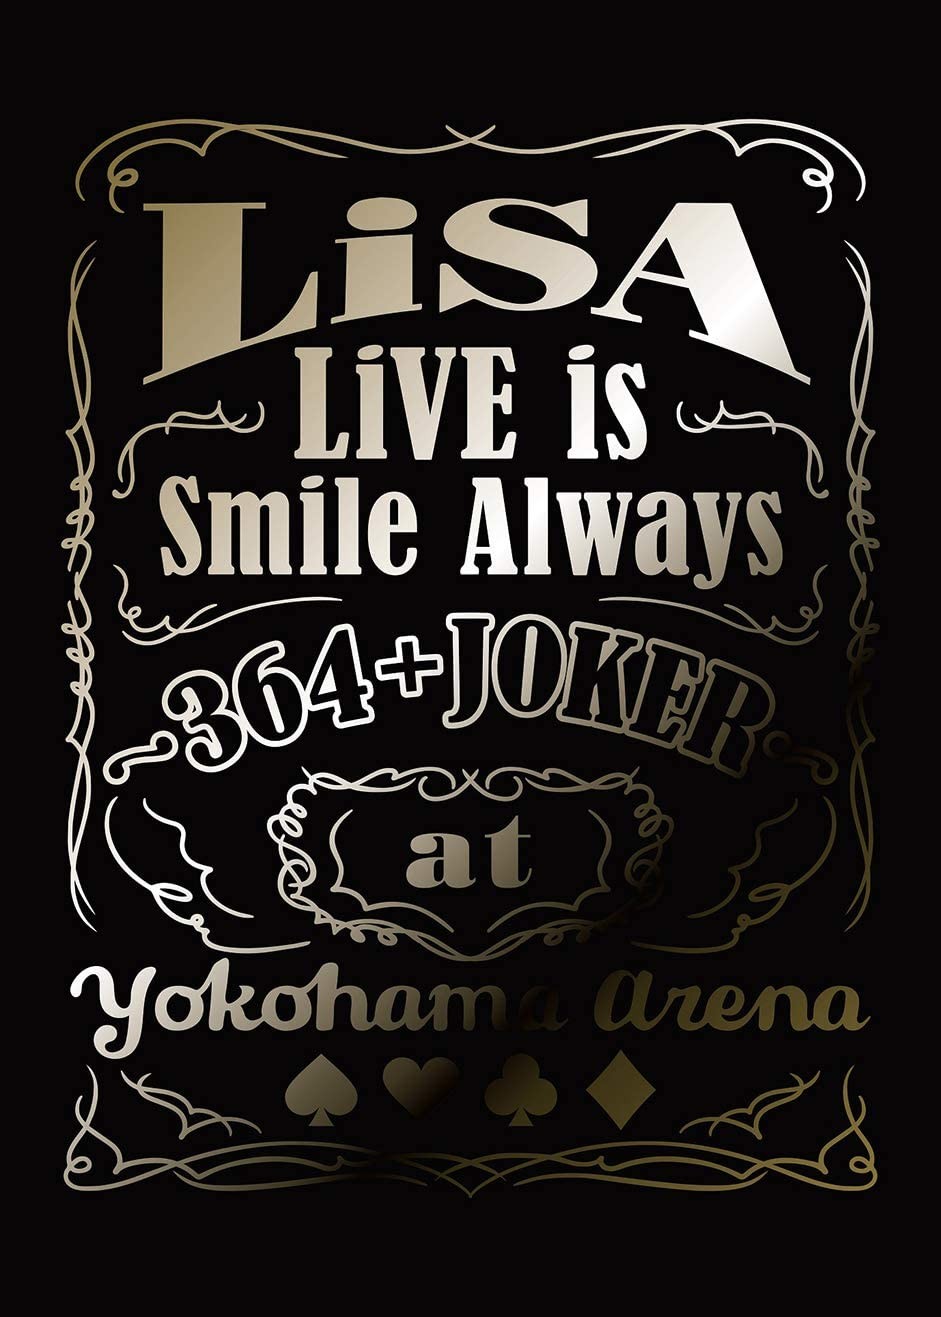 Album Lisa Live Is Smile Always 364 Joker At Yokohama Arena Cd Flac Rar Music Japan Download